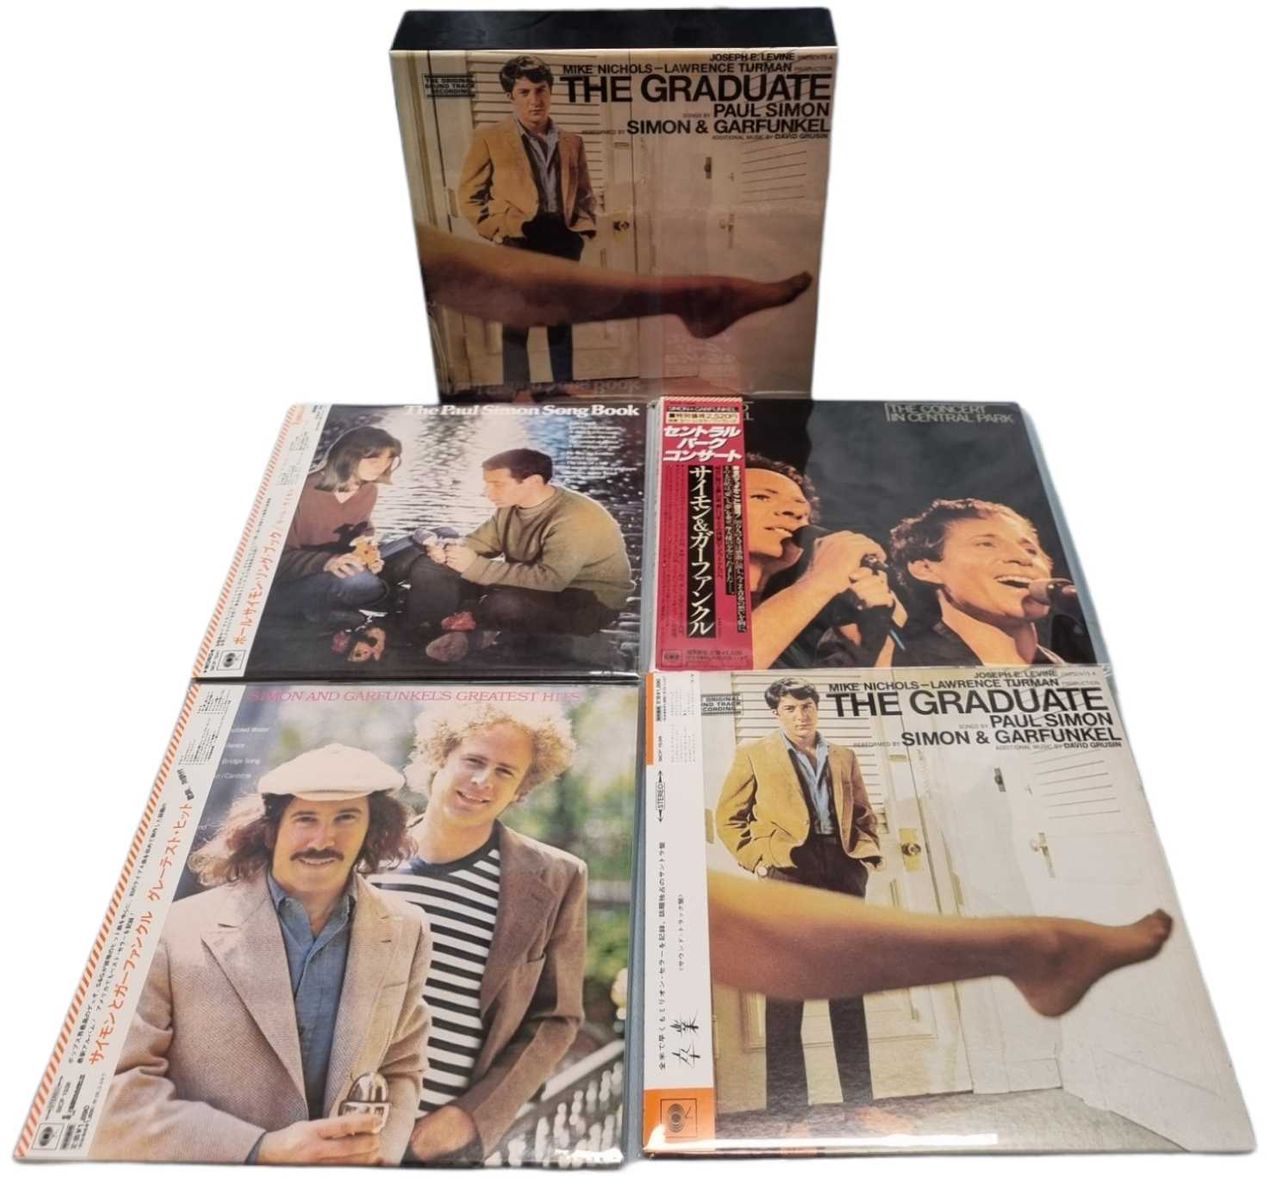 Simon & Garfunkel The Graduate - Paper Sleeve Collection Japanese CD Album Box Set SGFDXTH777032